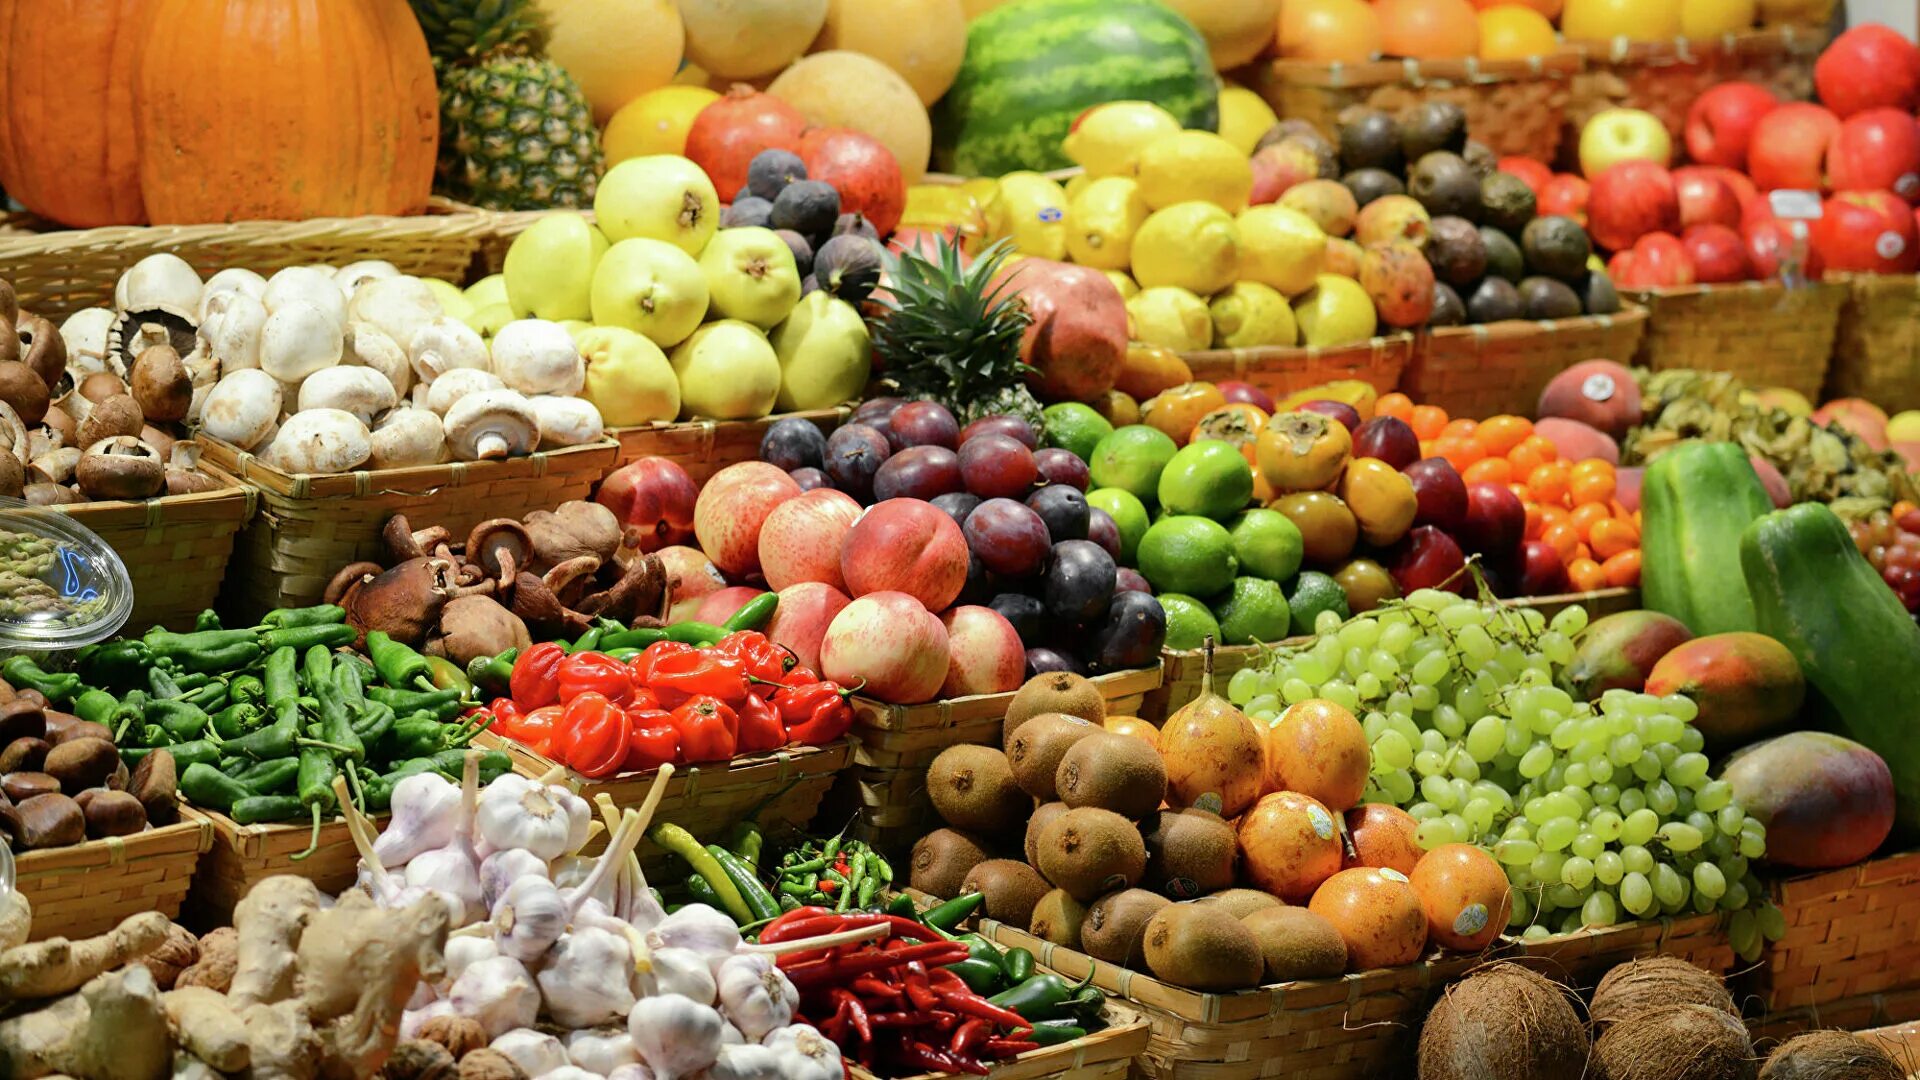 Органик мева сабзавот. Мева-сабзавот кластер. Овощи и фрукты. Овощи и фрукты на рынке.